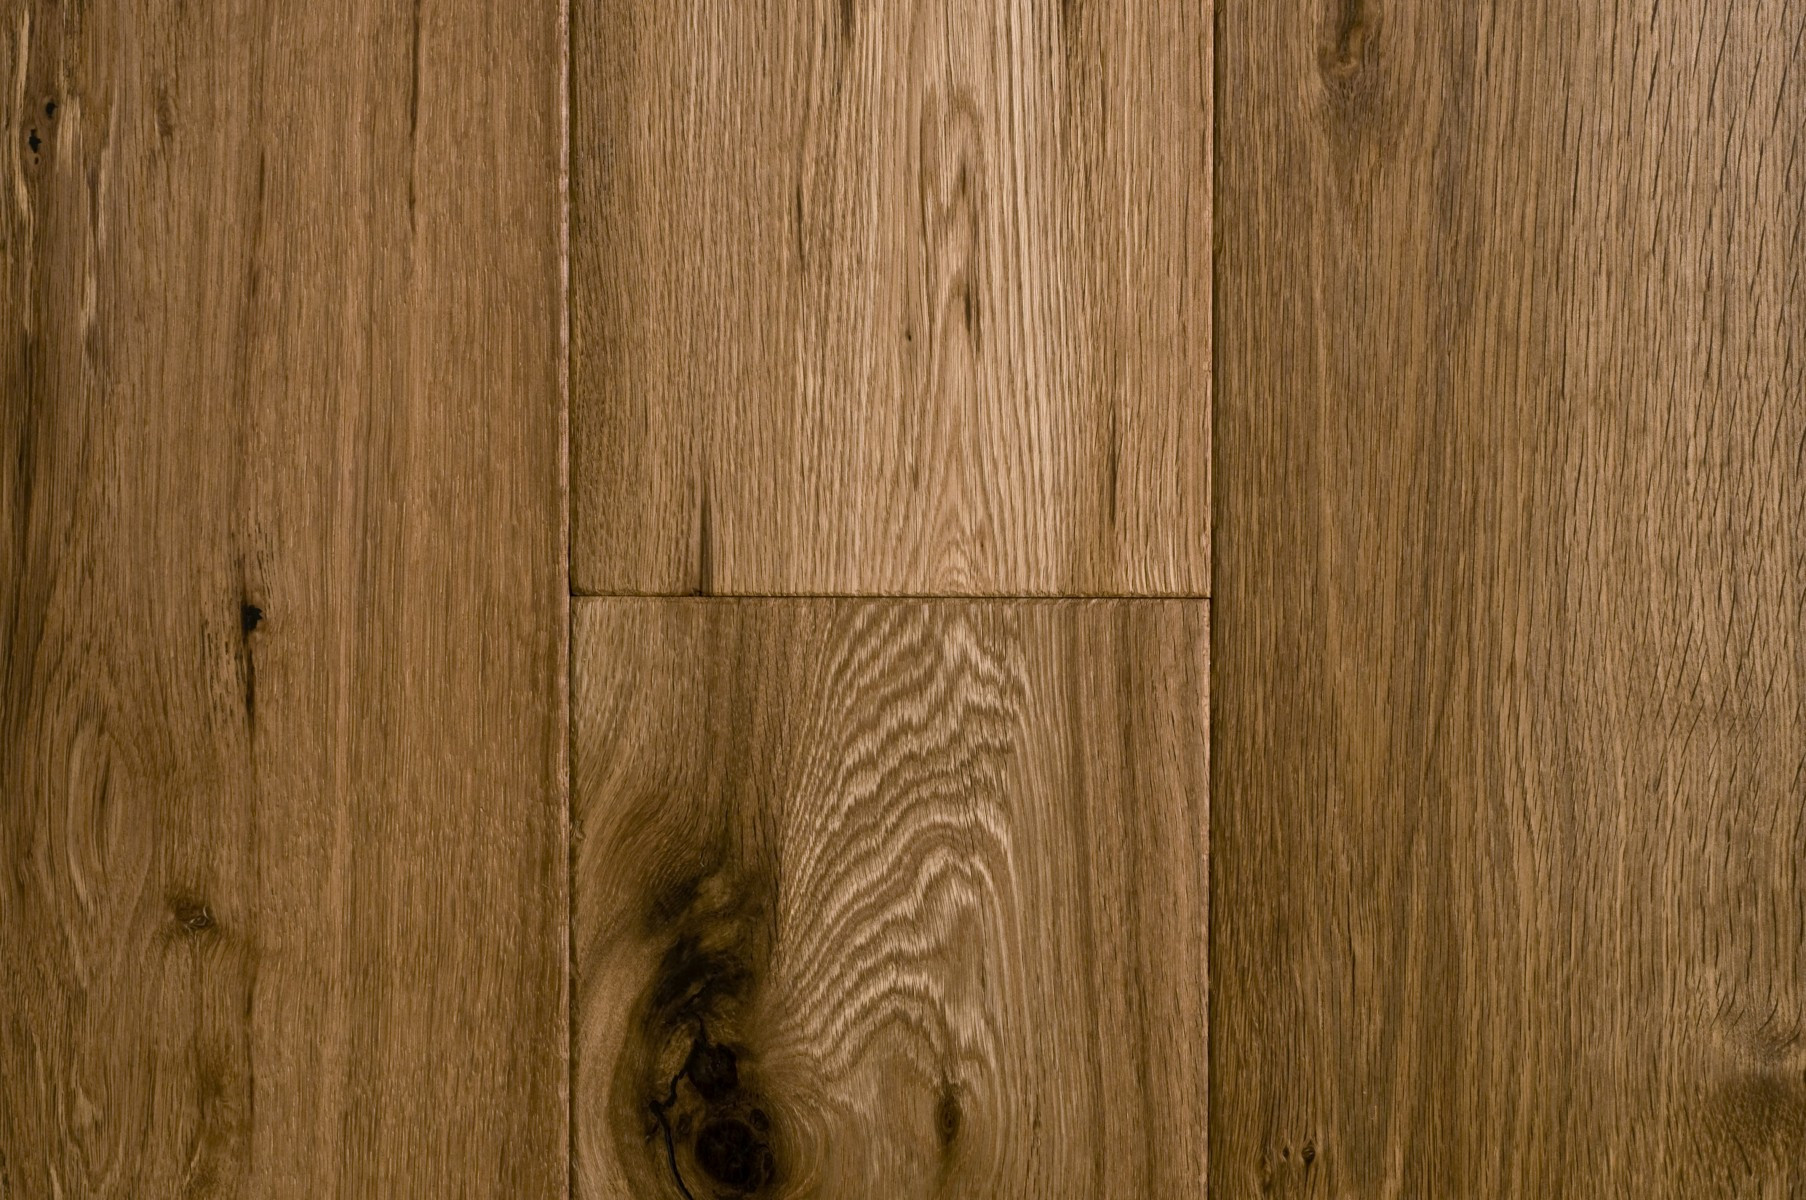 somerset hardwood flooring distributors of duchateau hardwood flooring houston tx discount engineered wood in olde dutch european oak